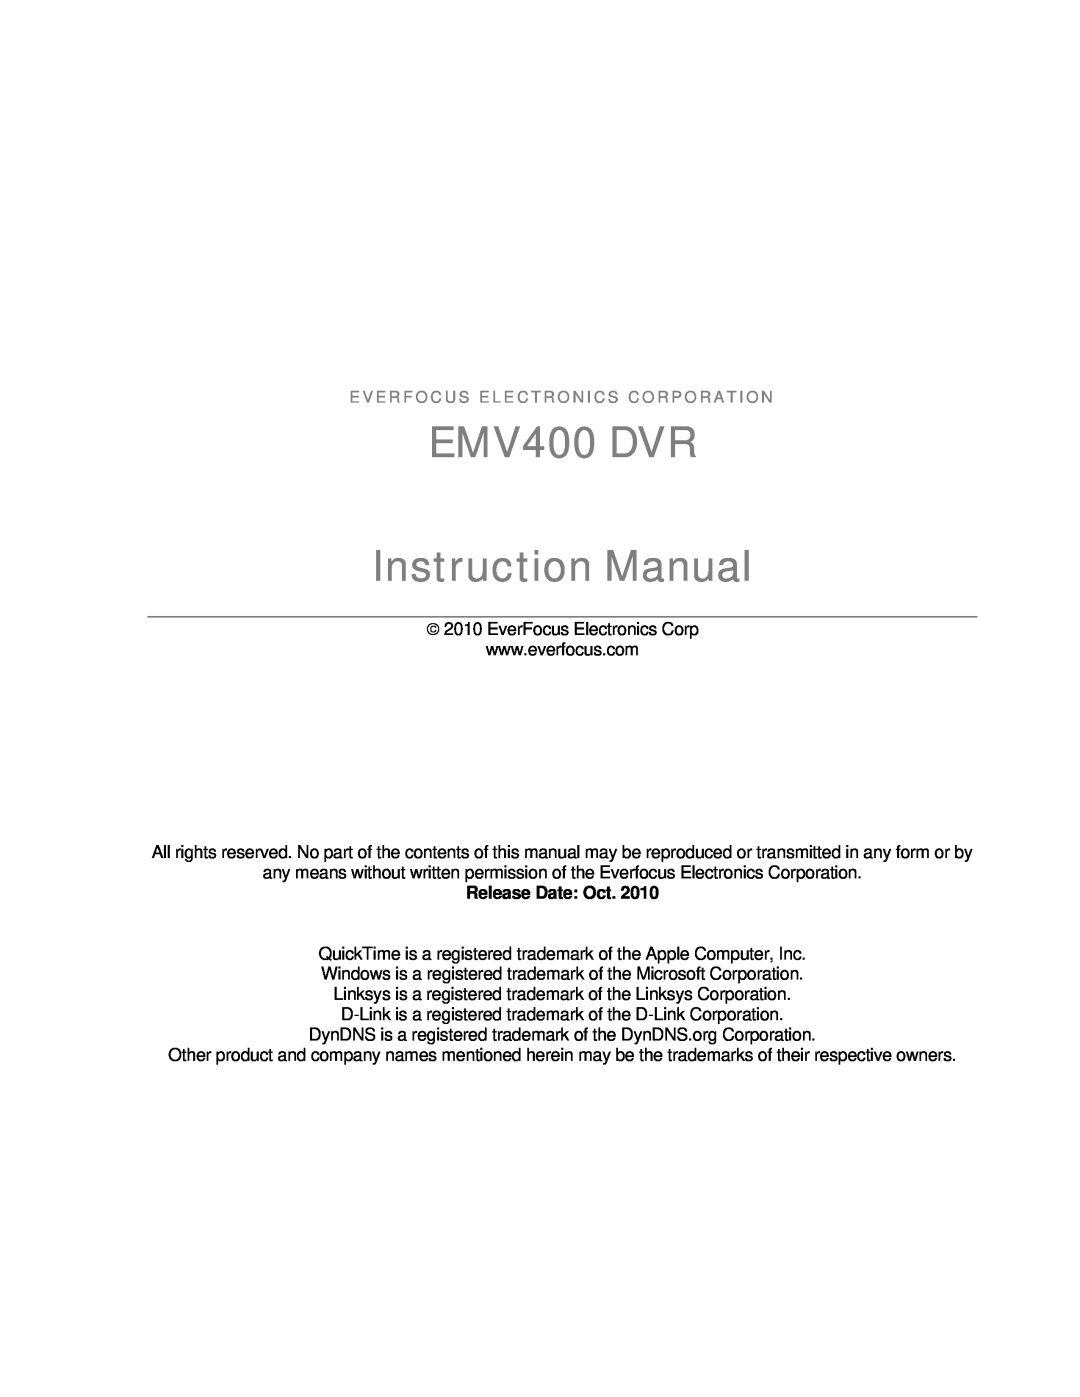 EverFocus user manual EMV400 DVR Instruction Manual, Release Date Oct 